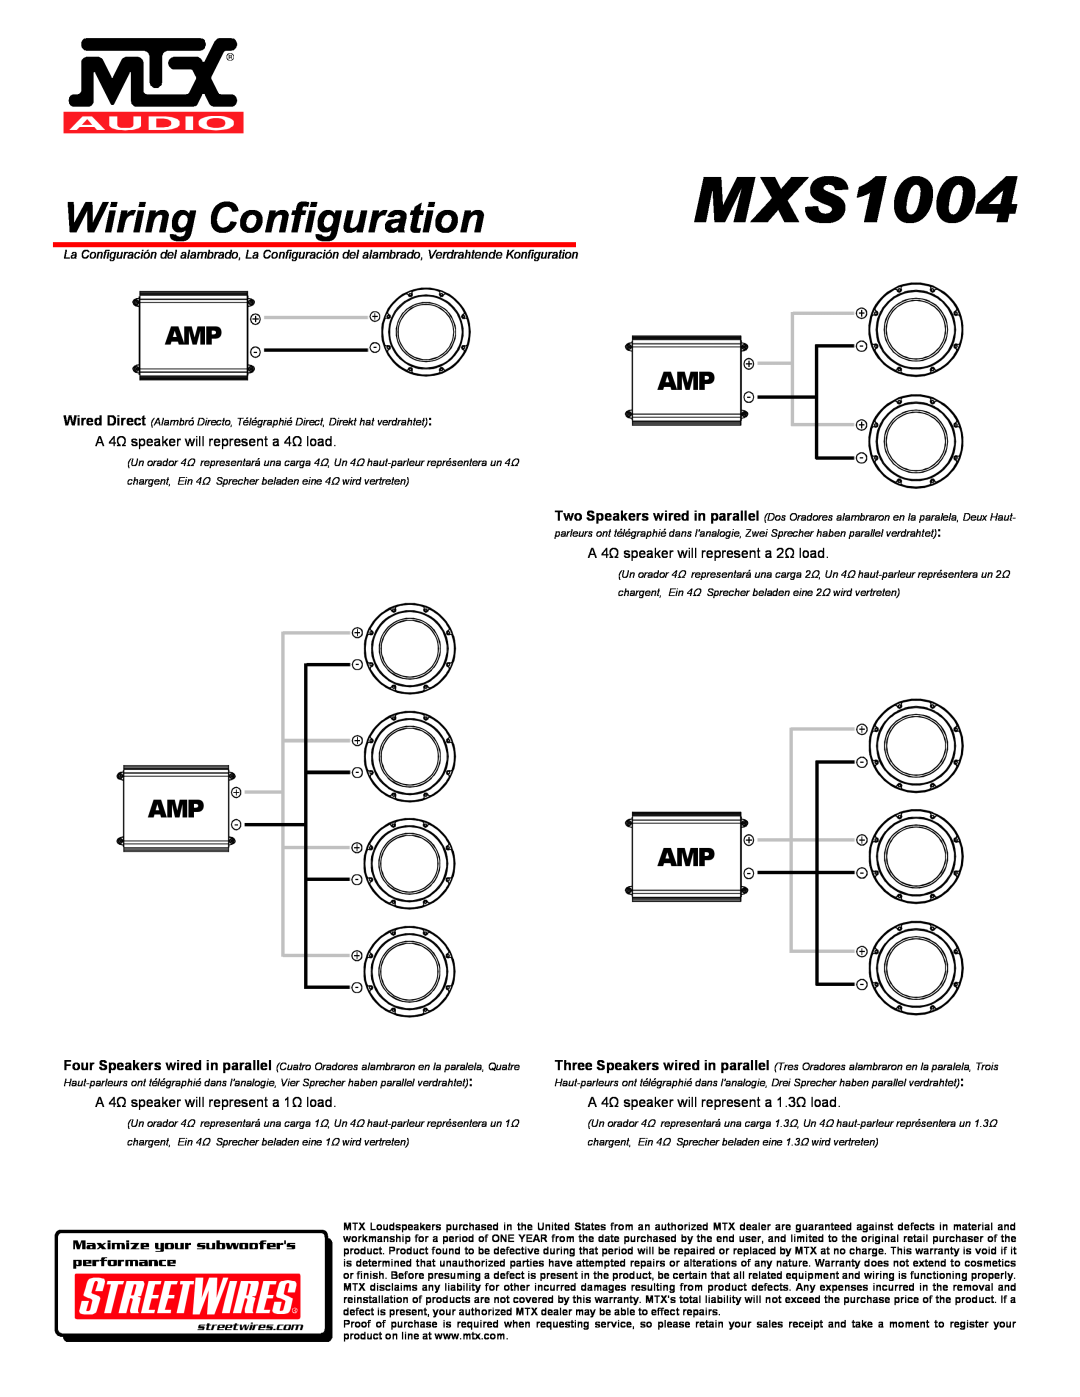 MTX Audio MXS1004 Wiring Configuration, A 4Ω speaker will represent a 4Ω load, A 4Ω speaker will represent a 2Ω load 